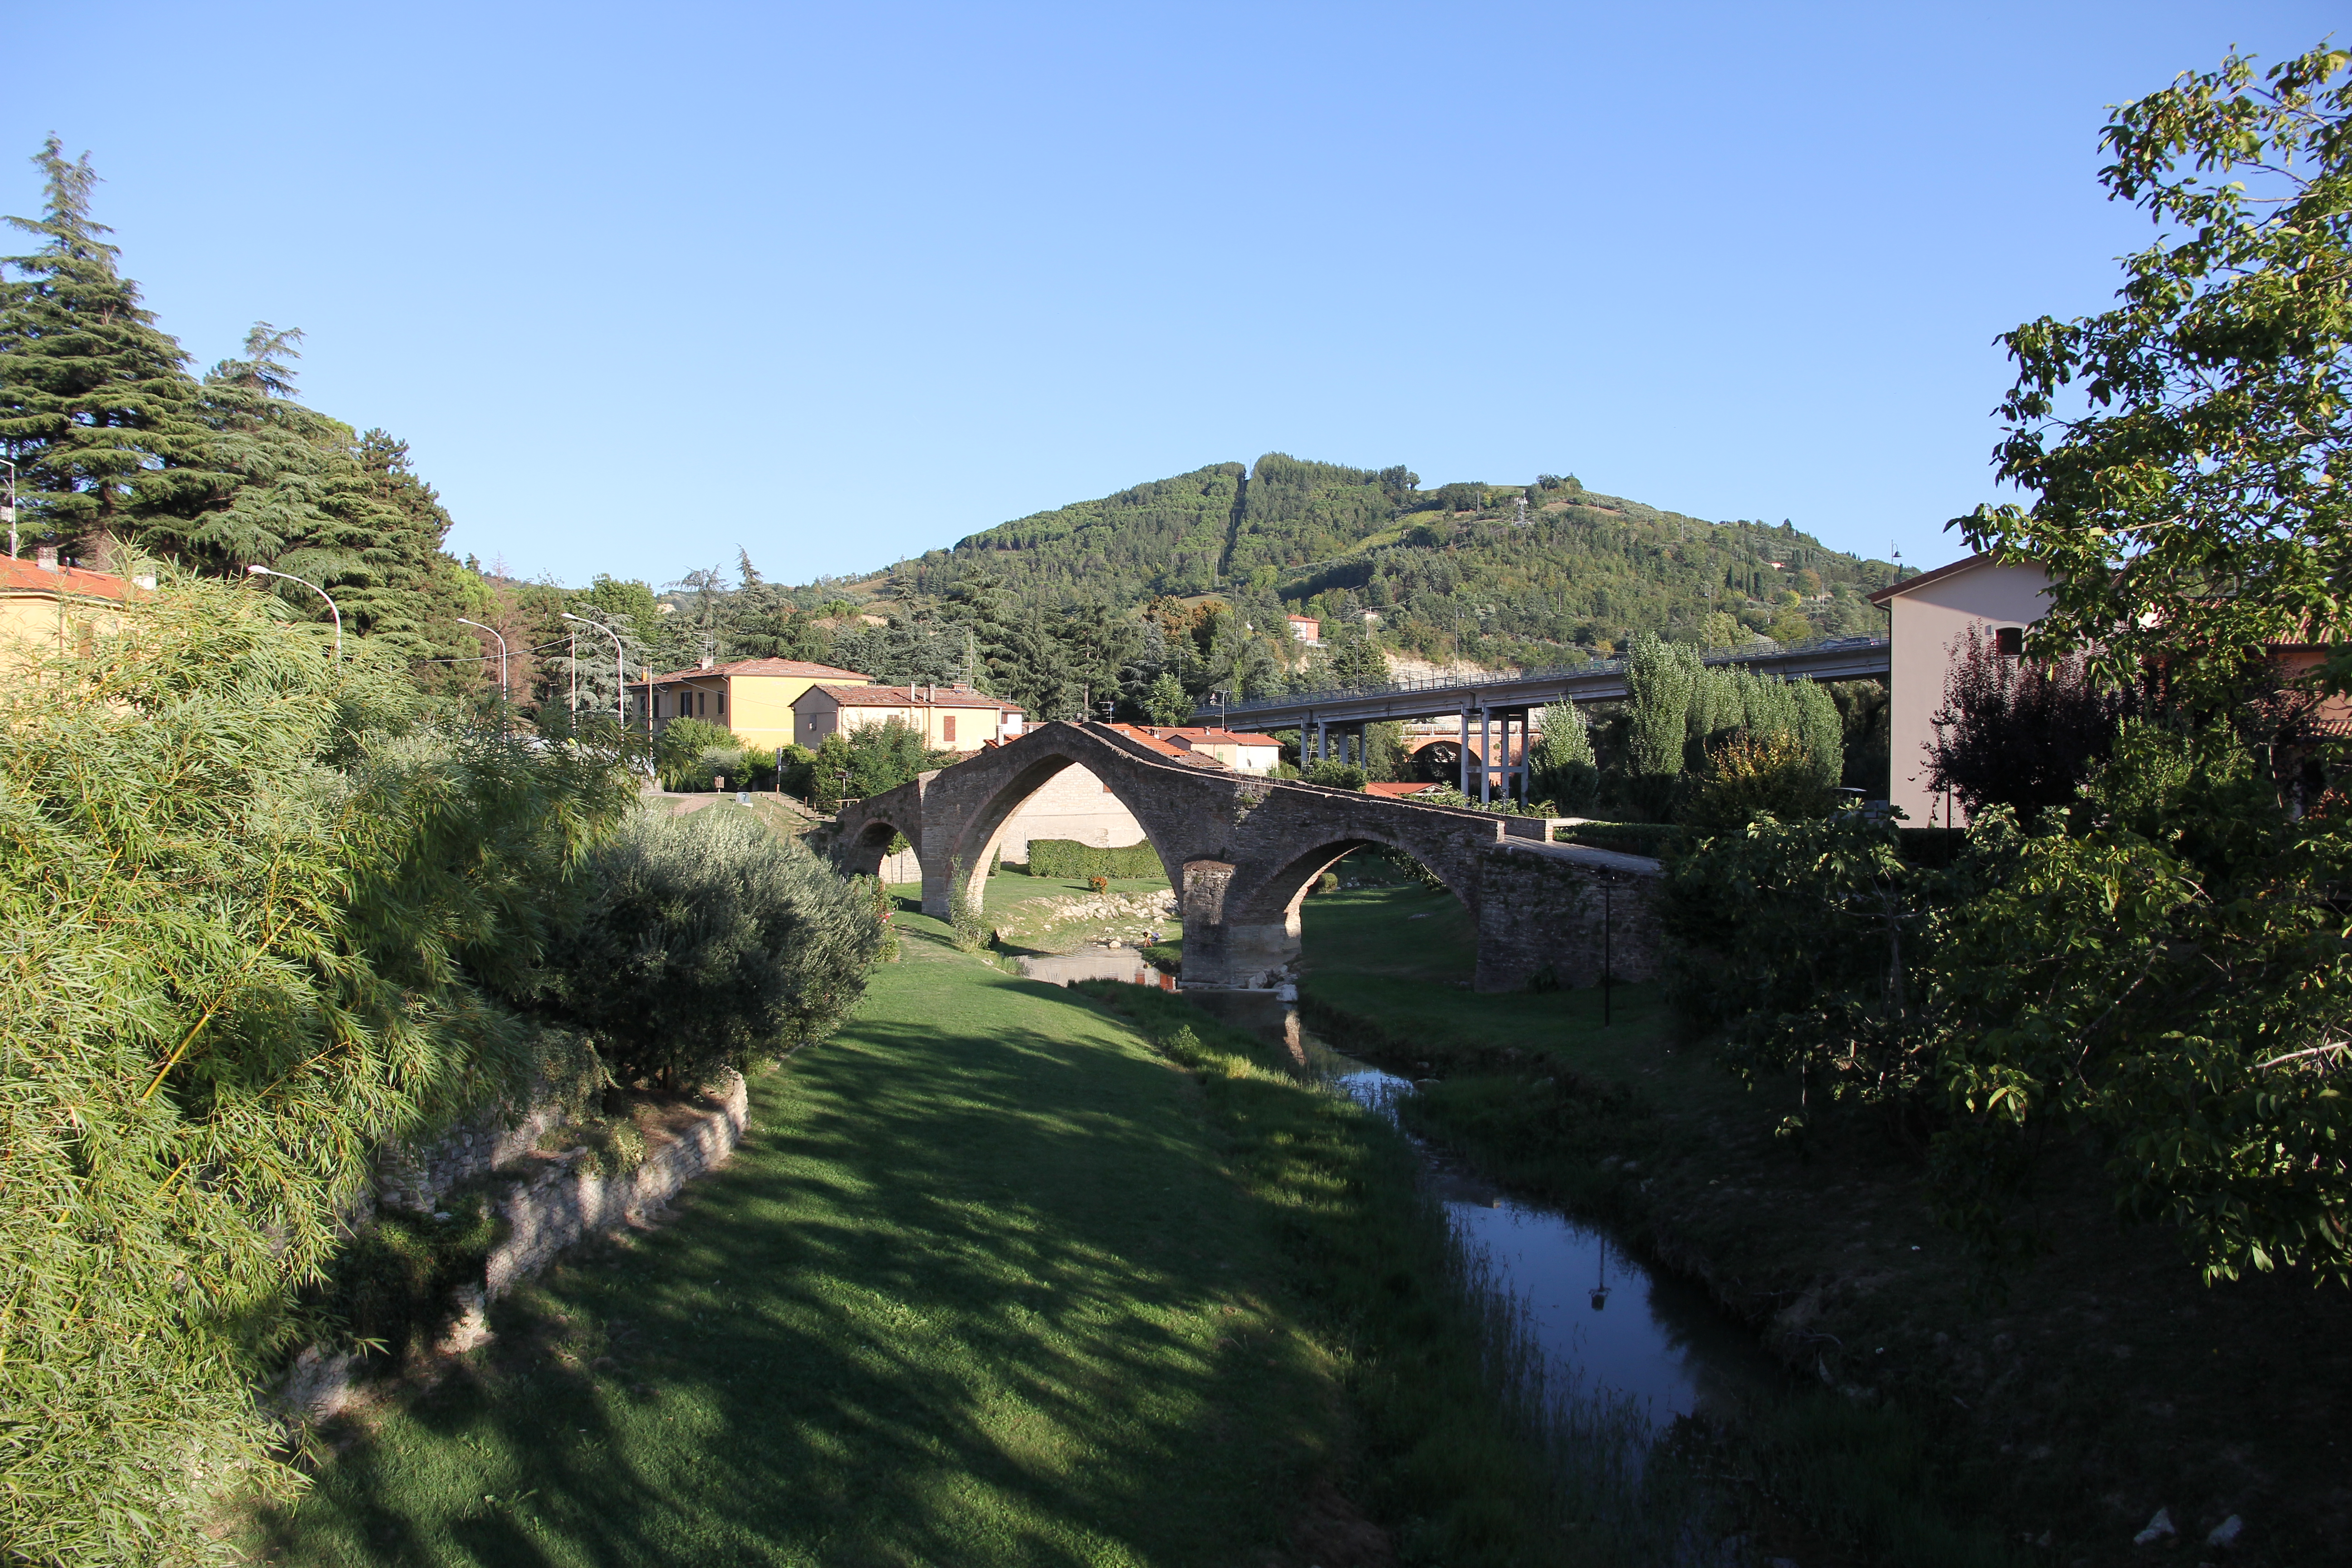 foto: https://upload.wikimedia.org/wikipedia/commons/b/ba/Modigliana%2C_ponte_di_San_Donato_%2804%29.jpg